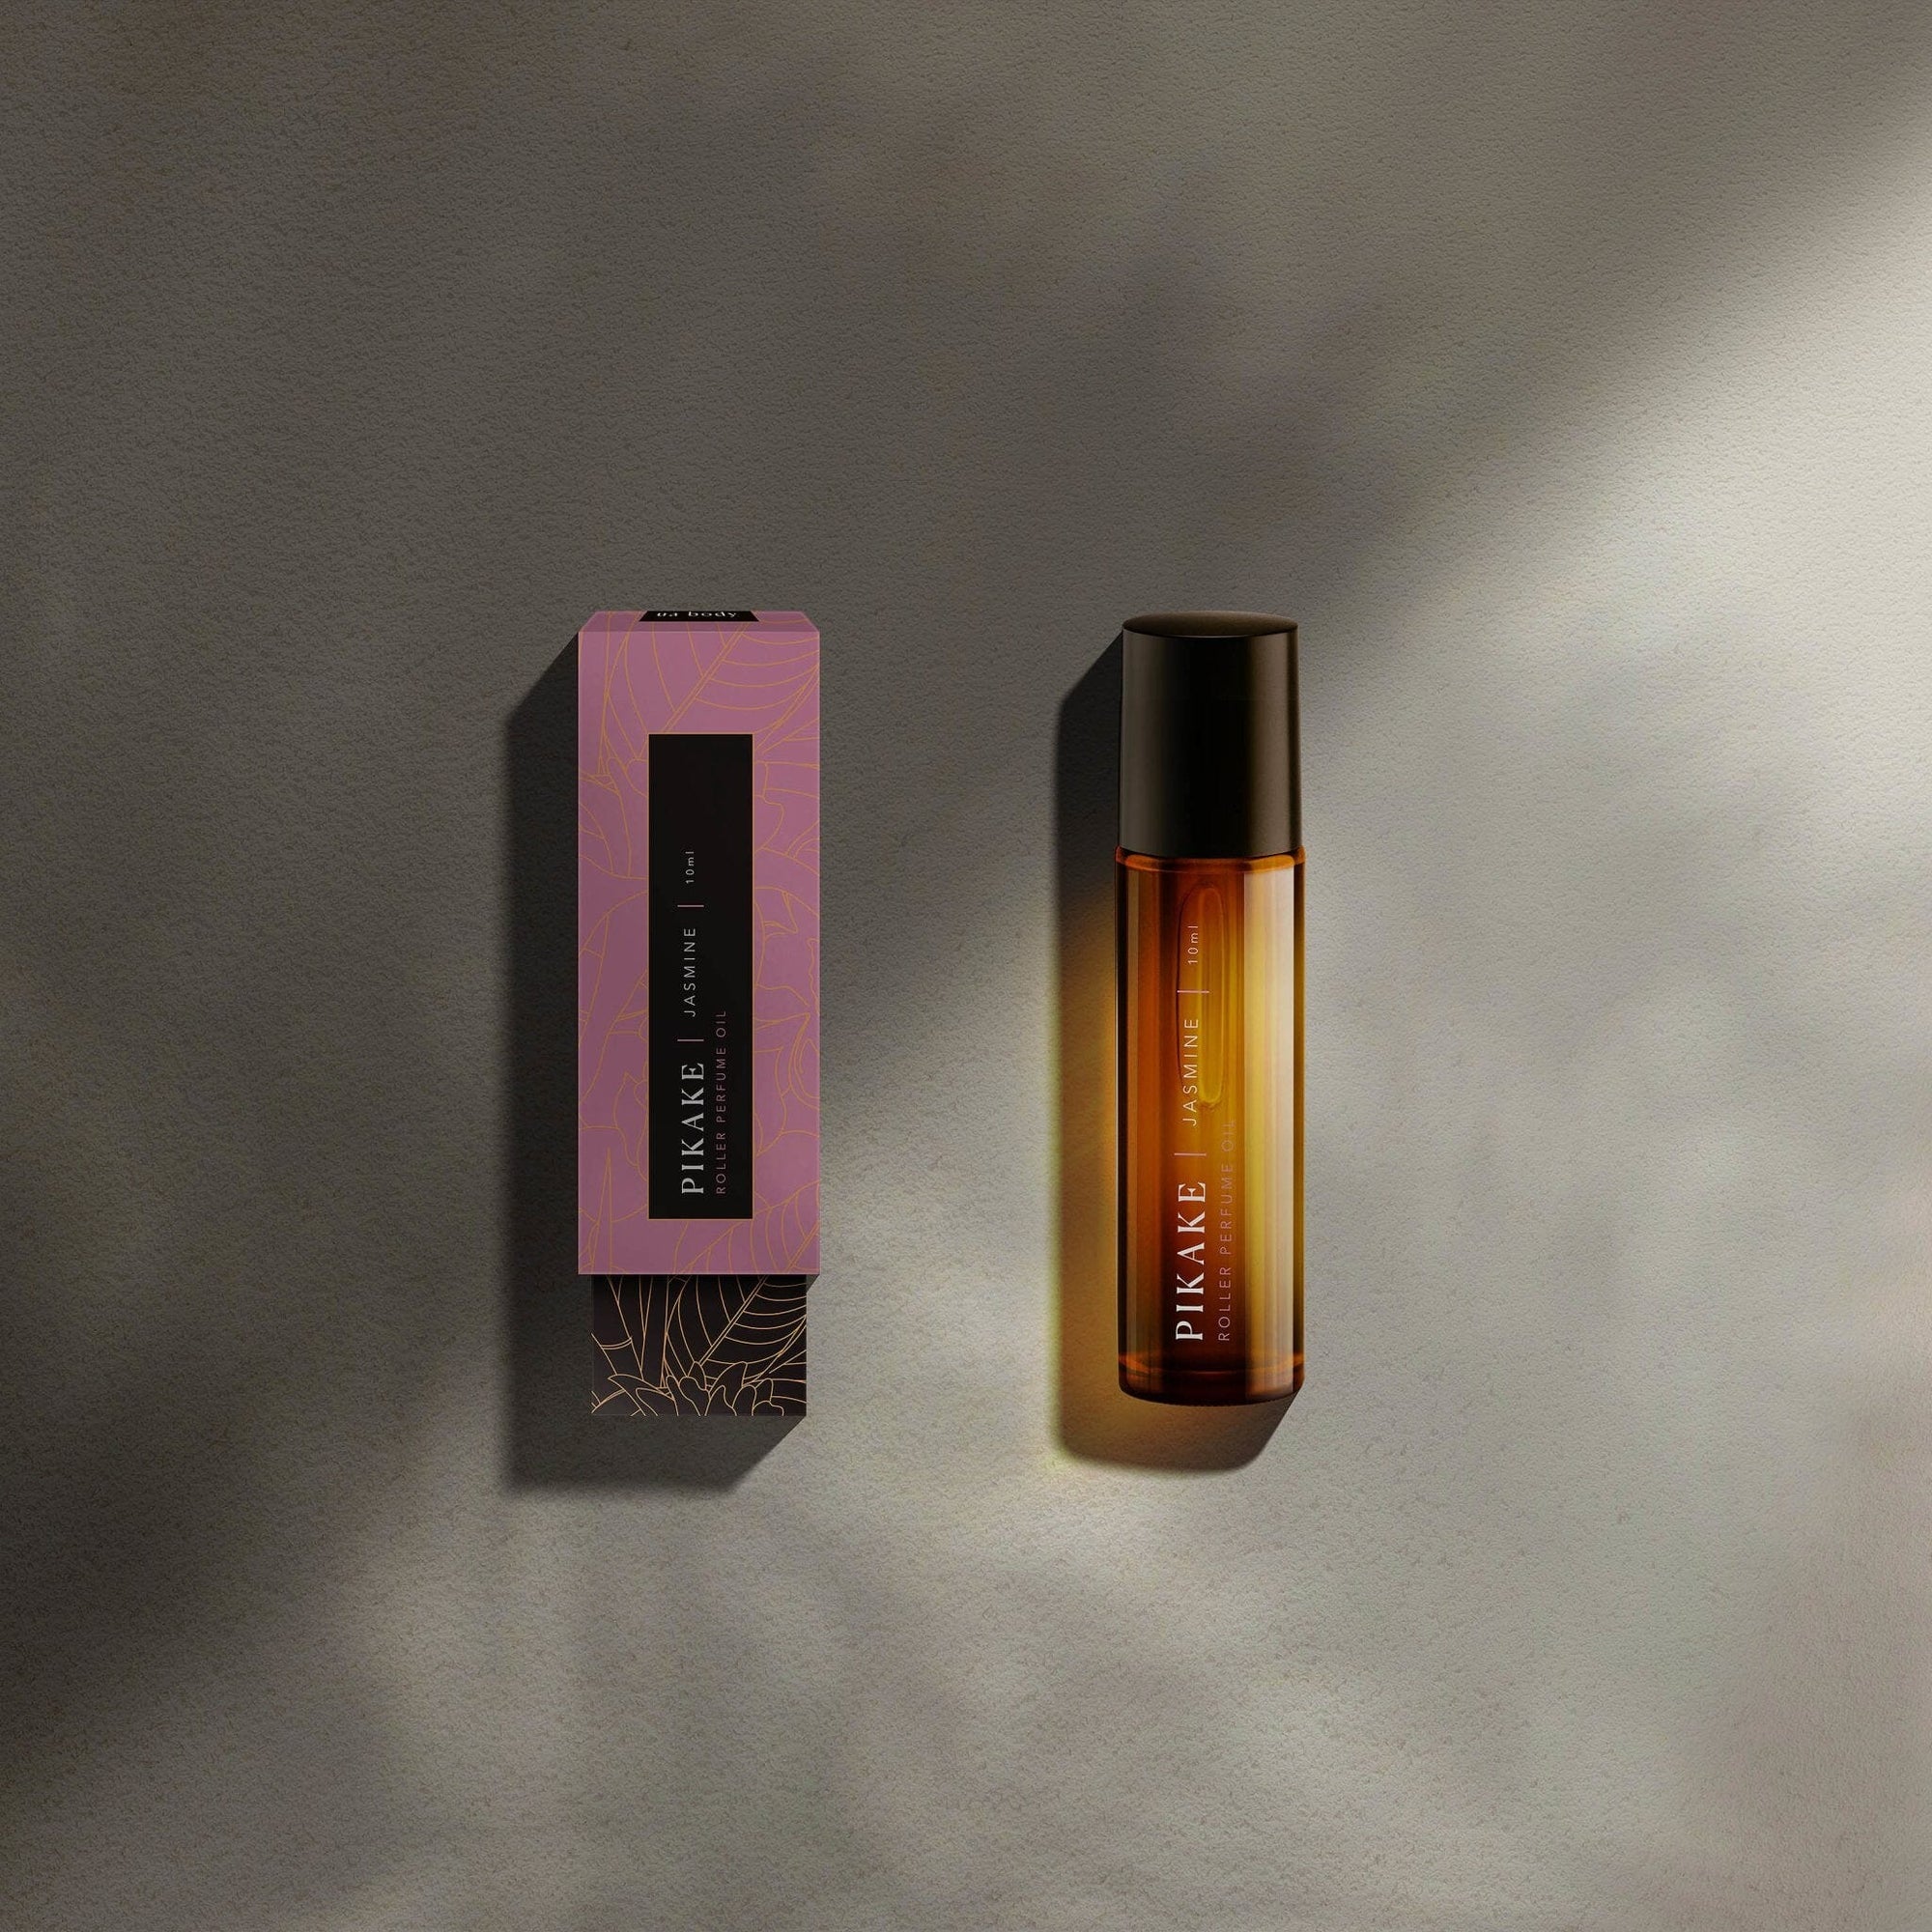 ua body - Pikake Jasmine Oil Perfume